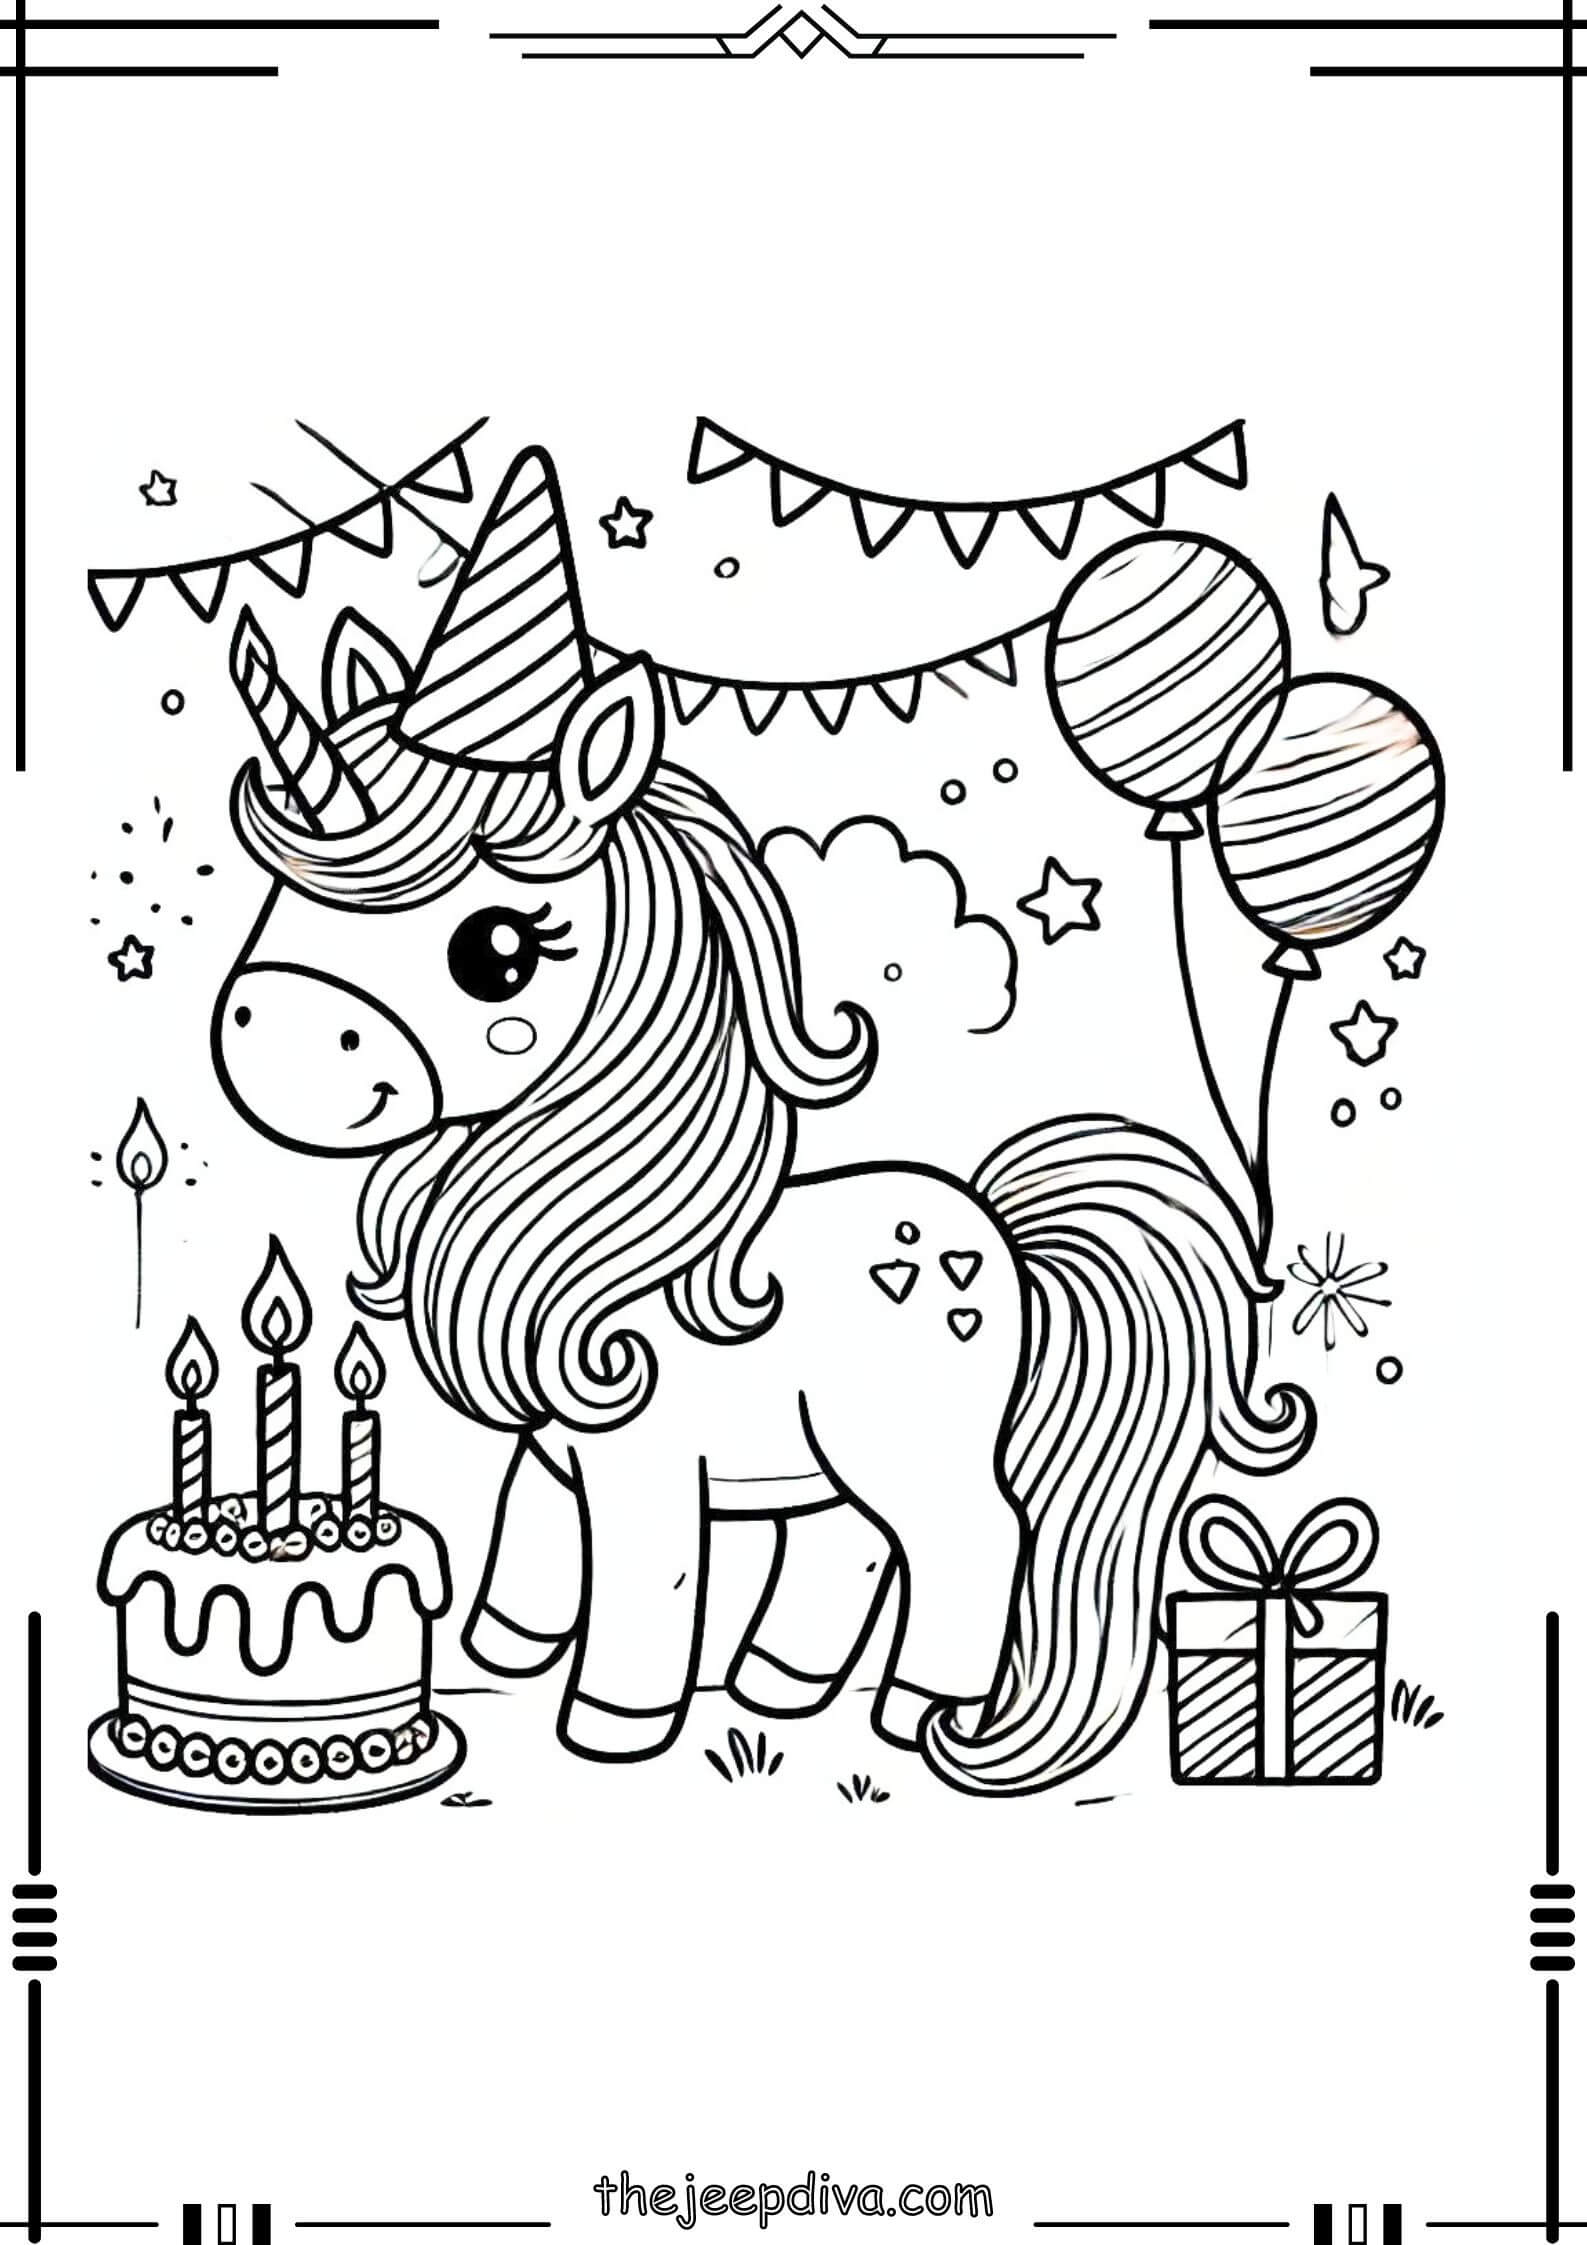 unicorn-coloring-page-hard-11